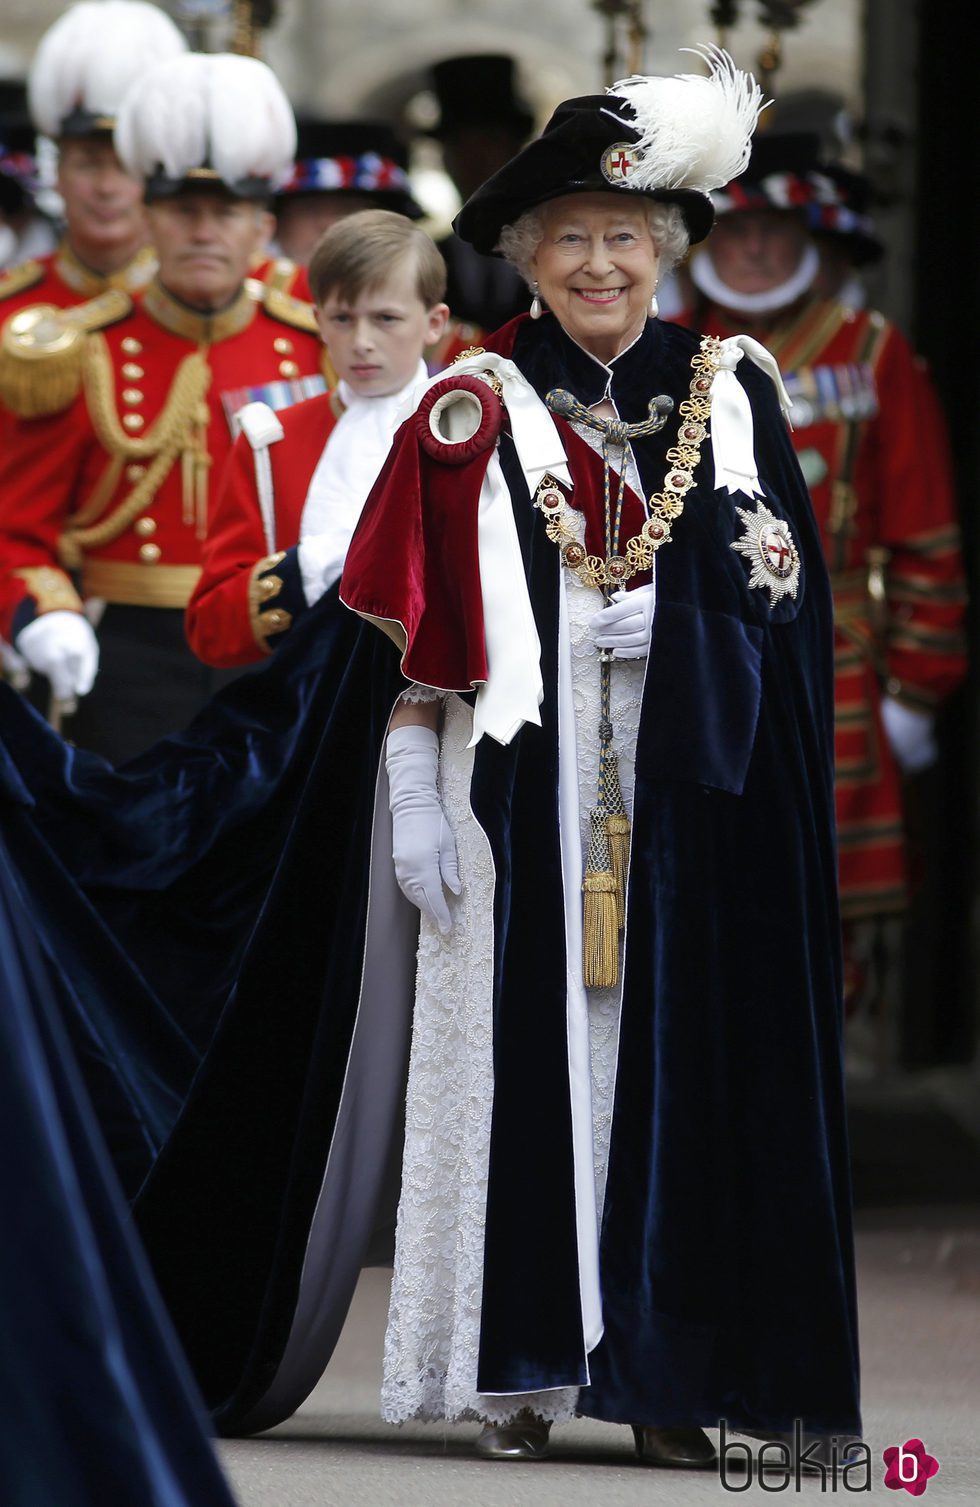 La Reina Isabel en la ceremonia de la Orden de la Jarretera 2015